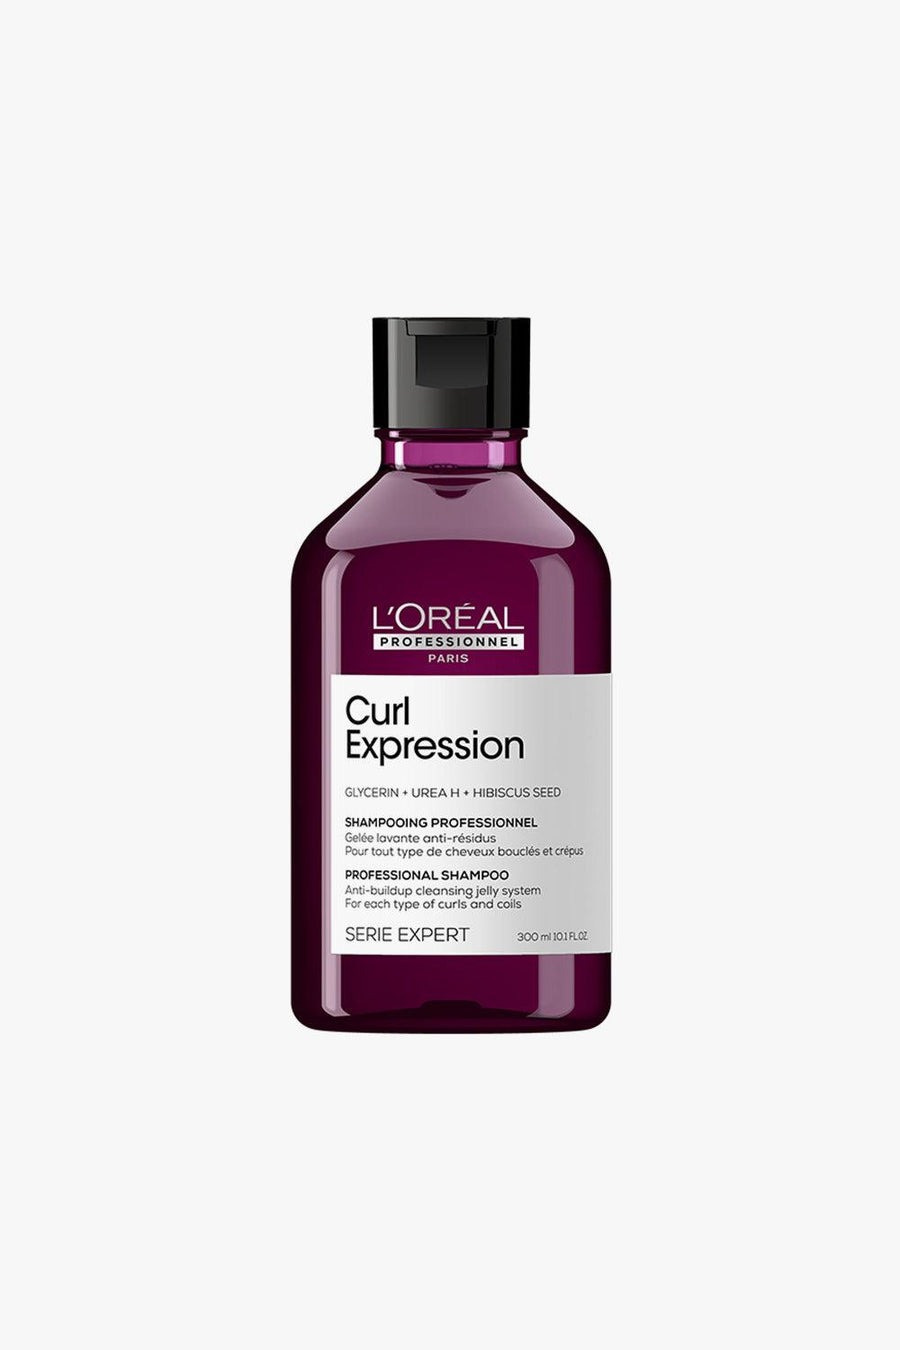 L'OREAL PROFESSIONNEL PARIS Curl Expression Professional Shampoo Gel 300 ml - Parfumby.com